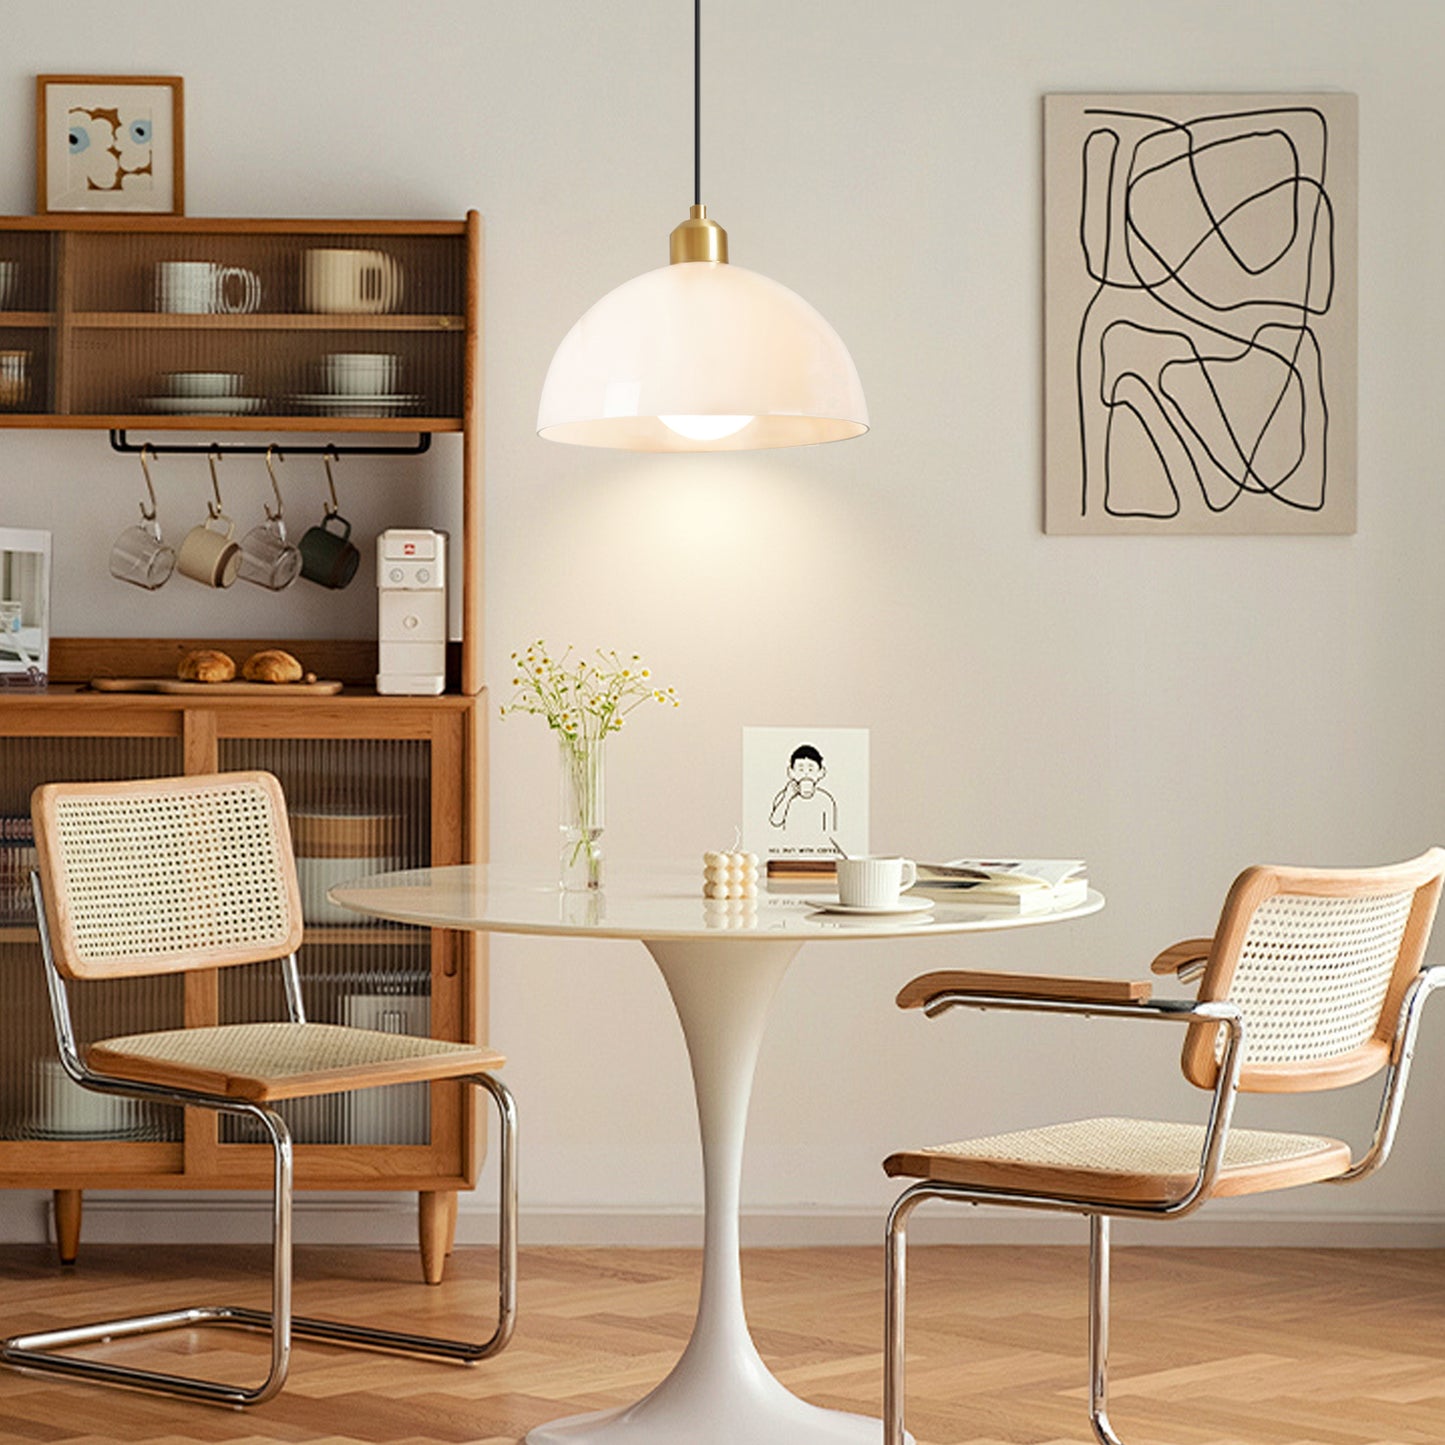 (N) ARTURESTHOME Nordic Modern Glass Pendant Simple Dining Room Lighting